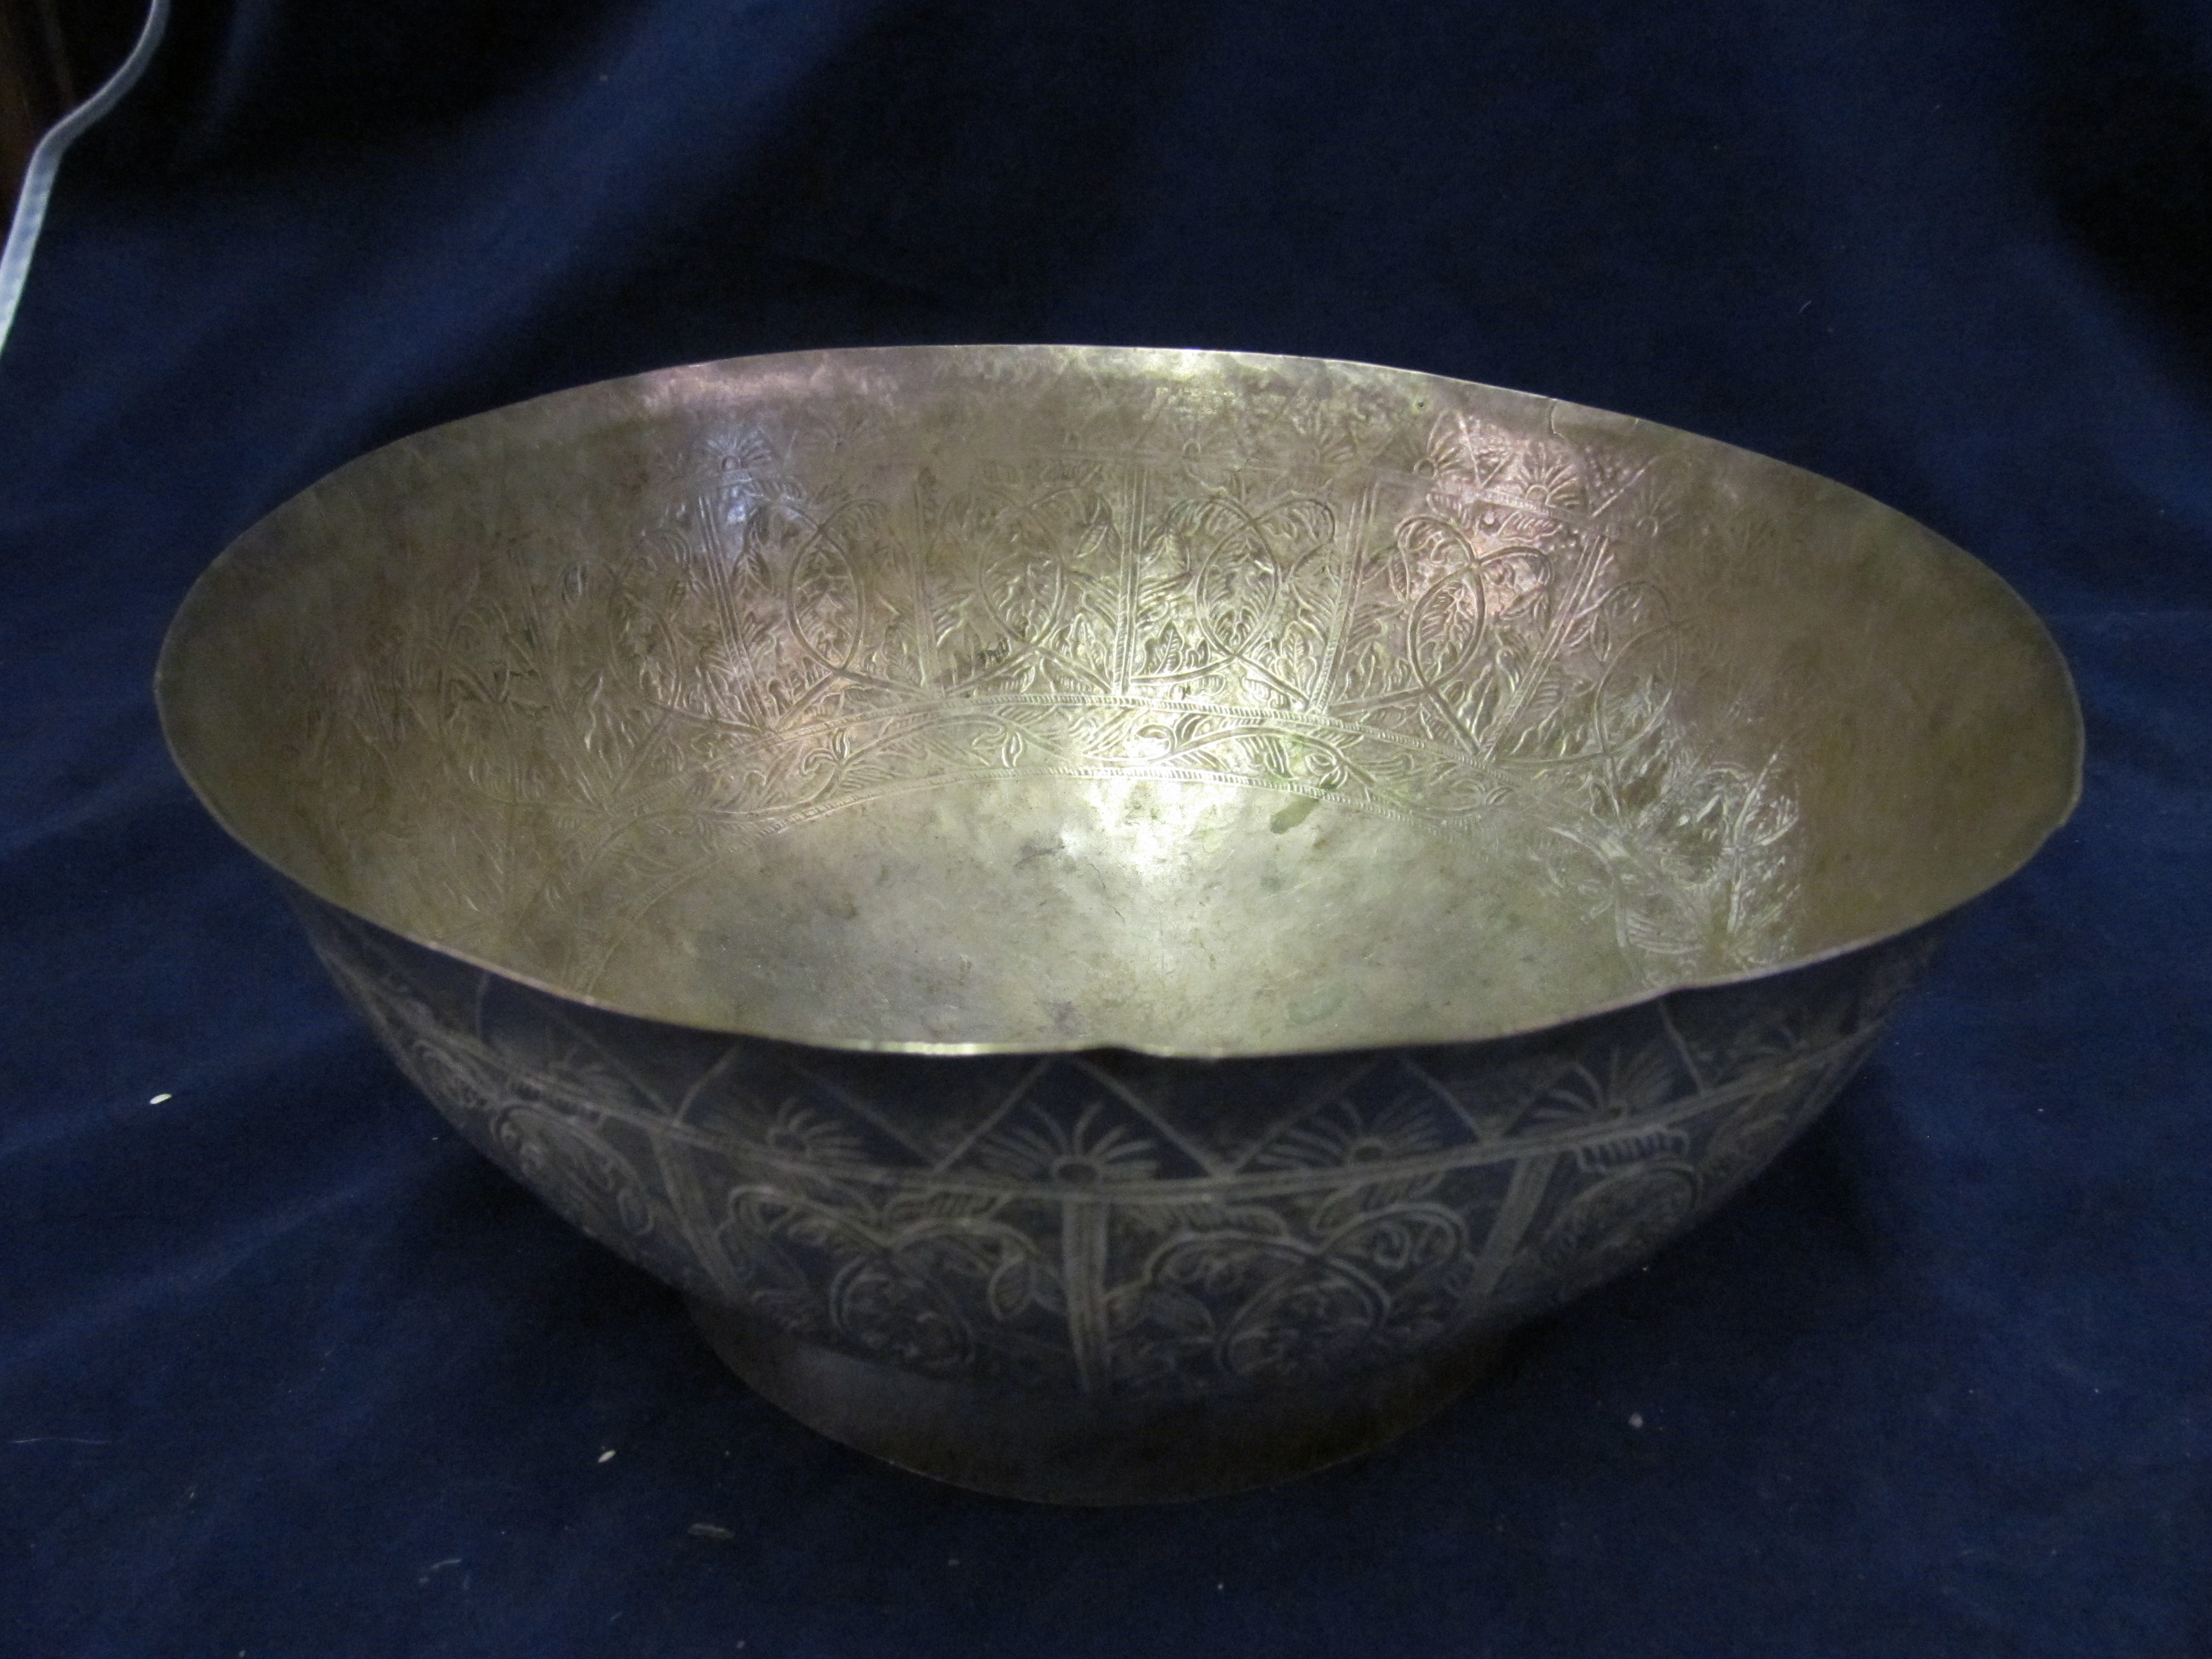 A Turkish silver bowl